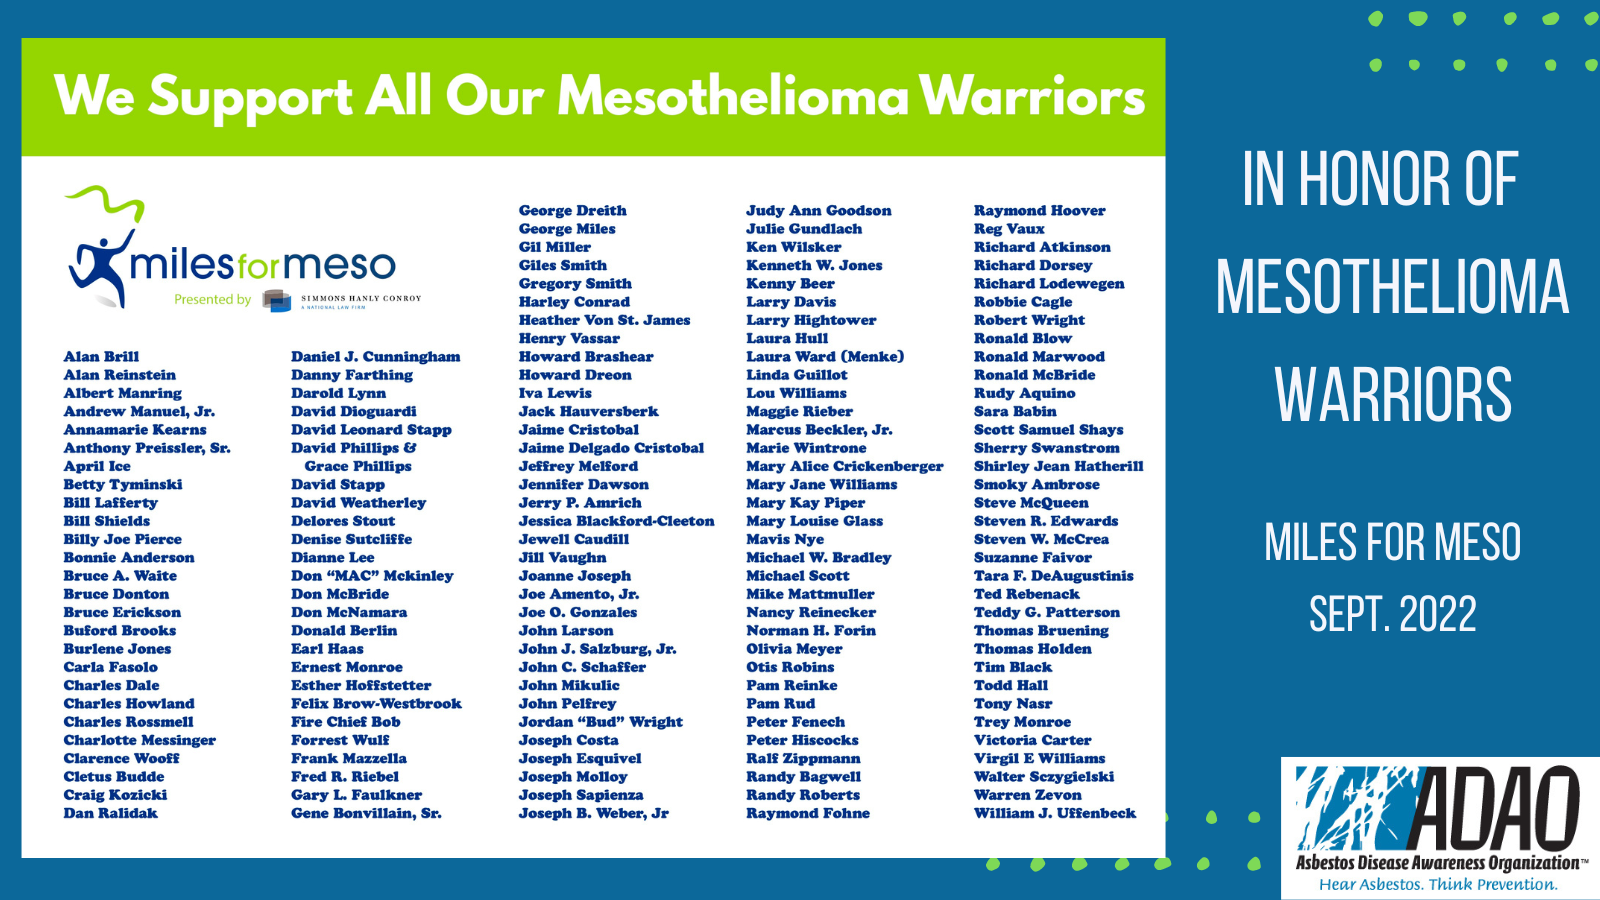 Miles for Meso 2022 Mesothelioma Warriors list ADAO Asbestos